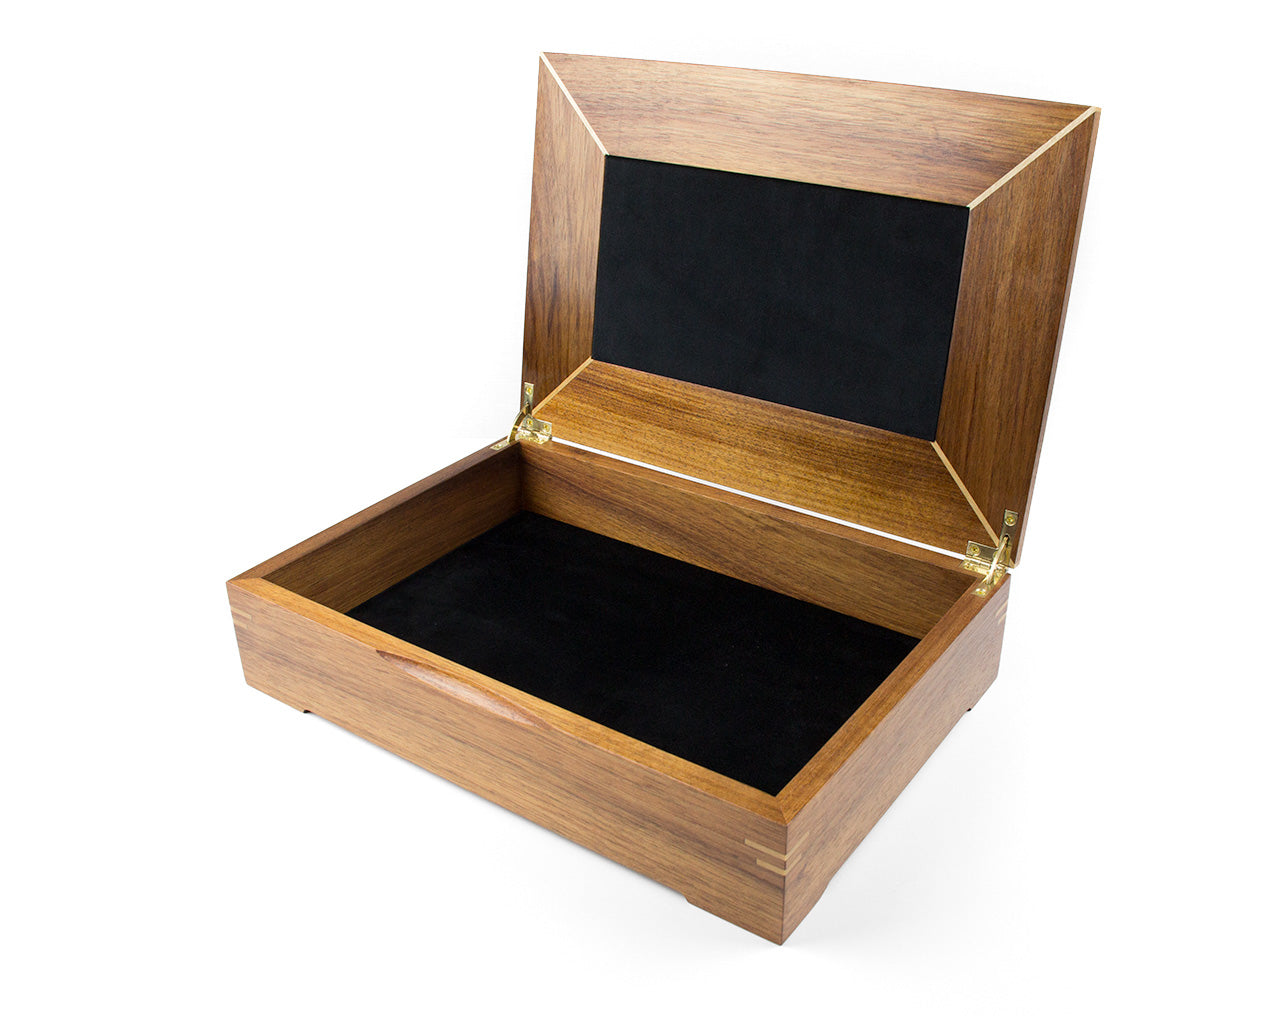 Wooden Document Box handcrafted from Tasmanian Blackwood & Maple Burl veneer